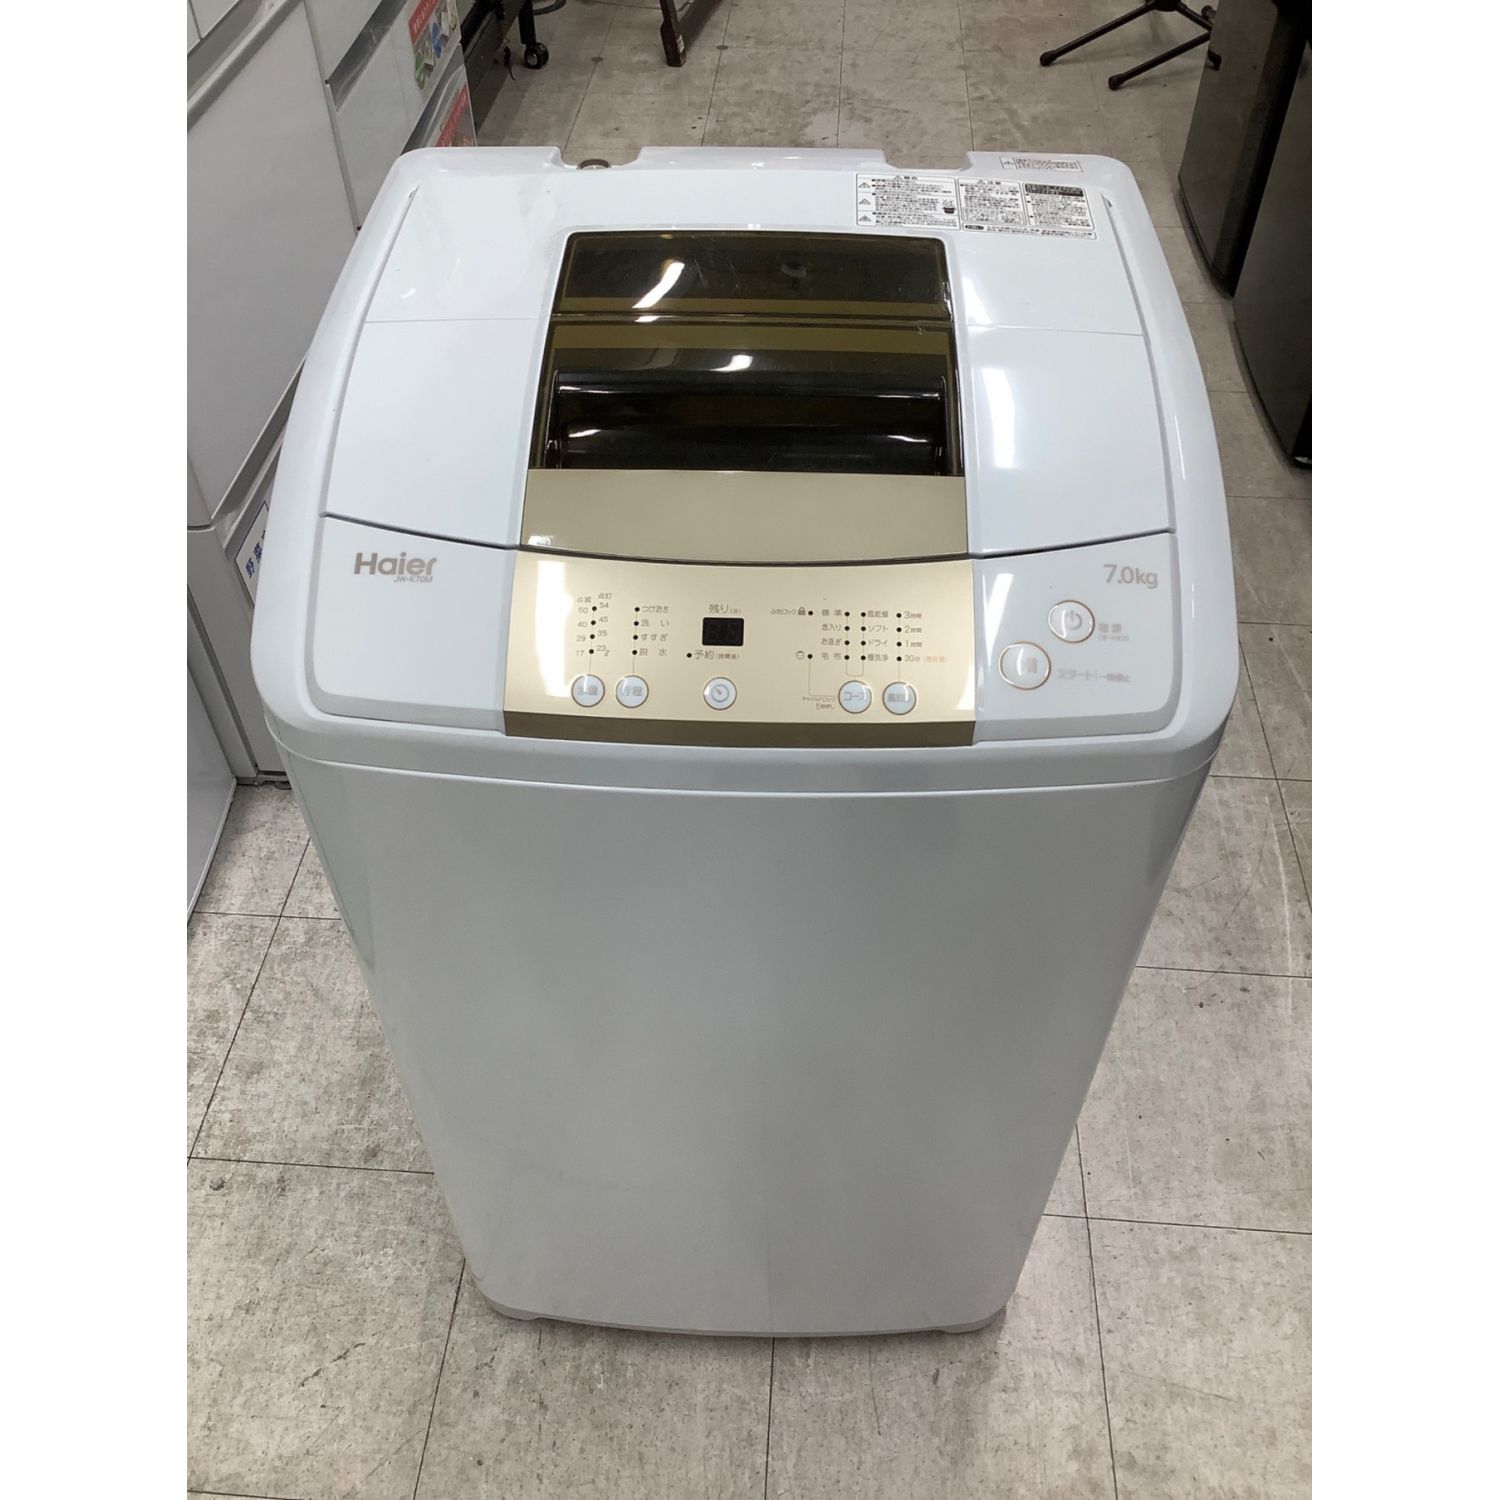 Haier (ハイアール) 全自動洗濯機 7.0kg JW-K70M 2017年製 程度C(内部